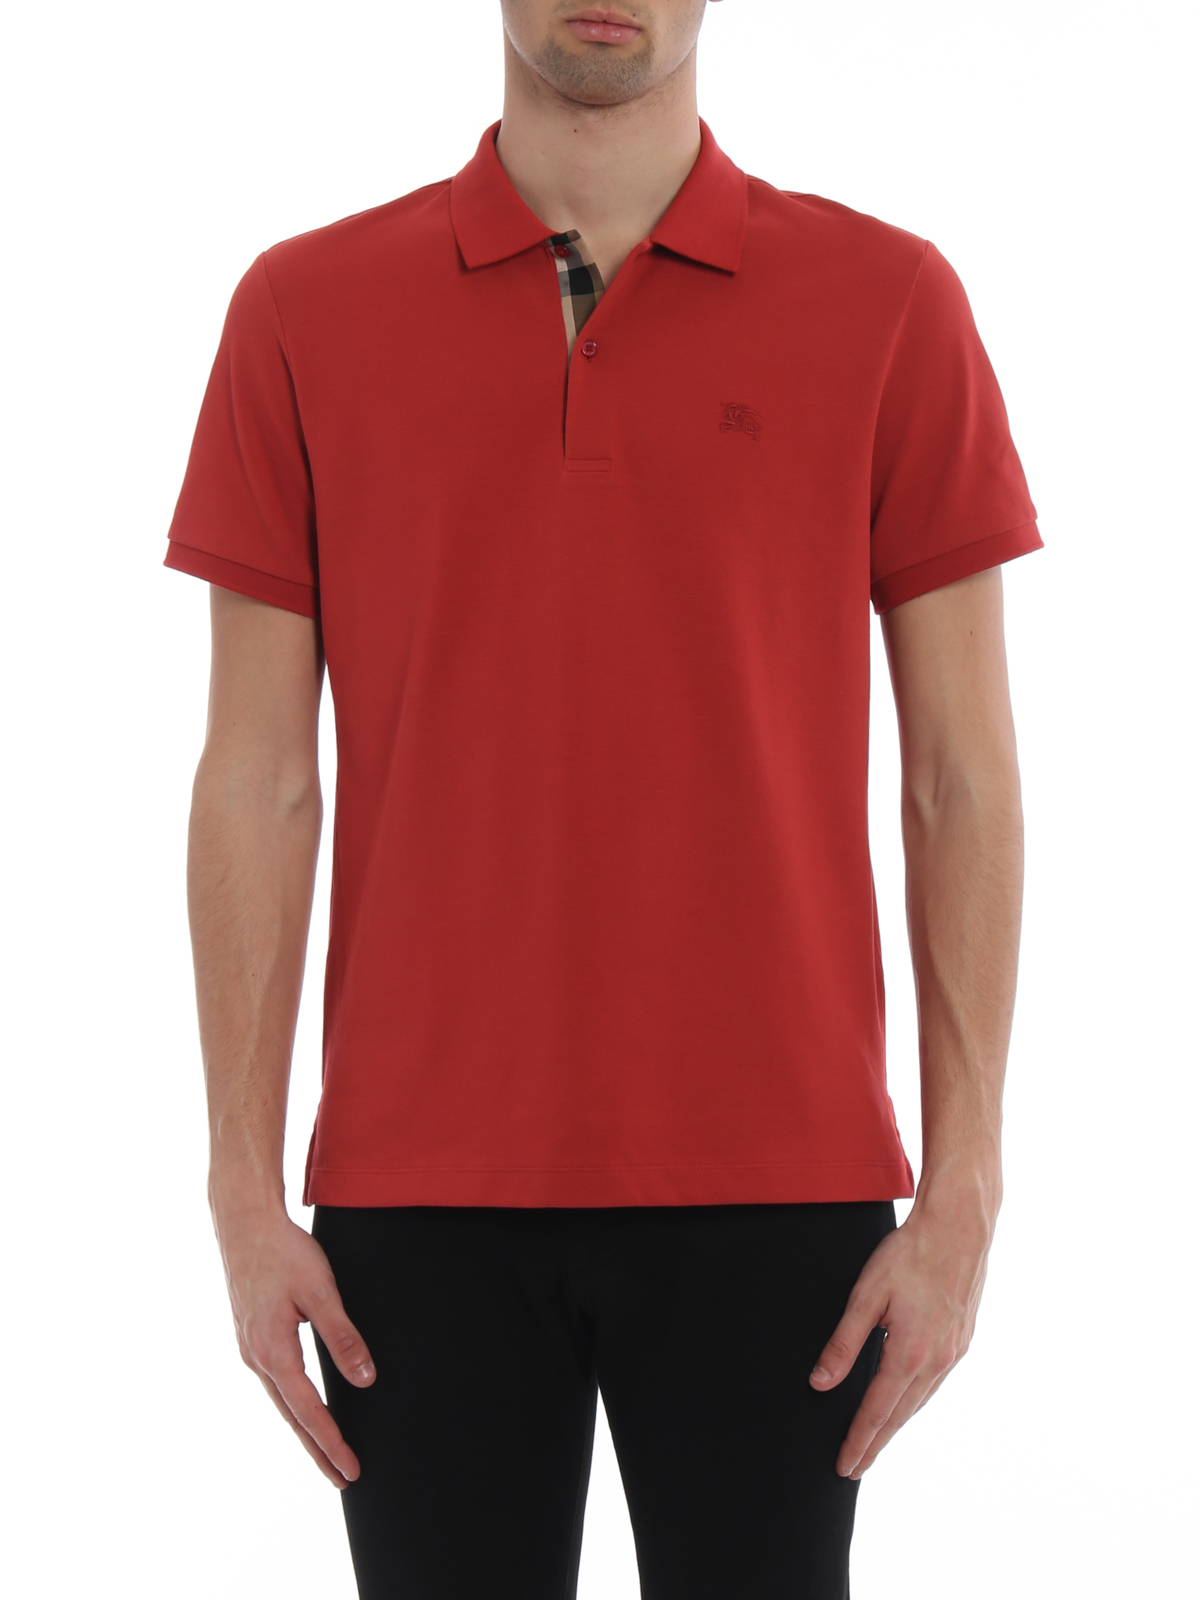 Polo shirts Burberry - Oxford red cotton polo shirt - 4056189 